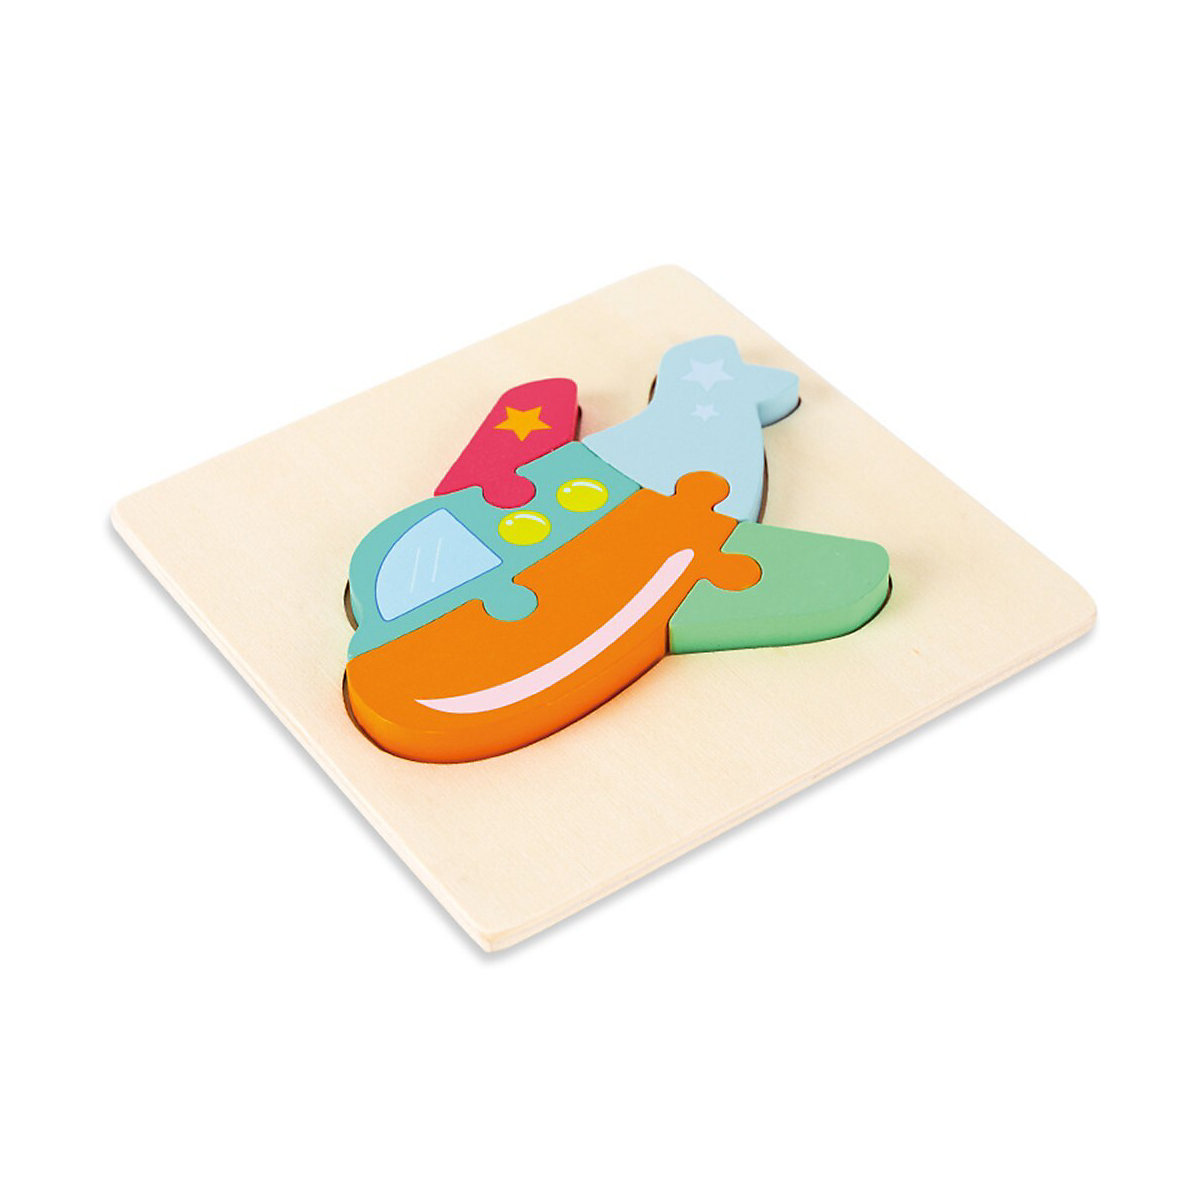 enbaoxin Holzspielzeug 3D puzzle Memory-Spiel Cartoon 3d puzzle holzspielzeug Kinderspielzeug